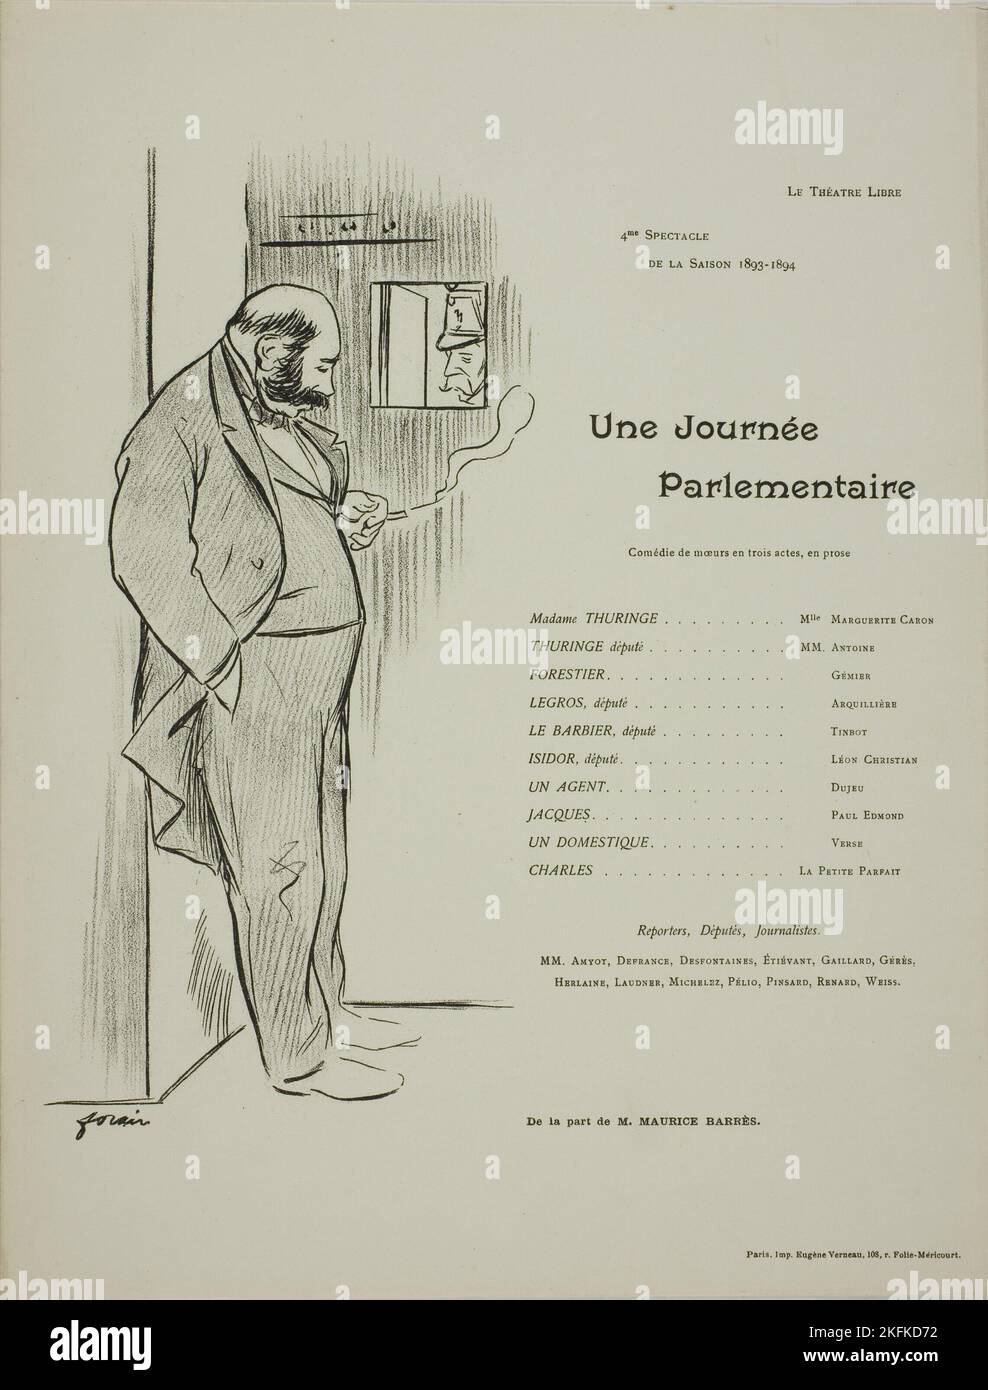 Programma teatrale per un Journee Parlementaire, 1893&#x2013;94. Foto Stock